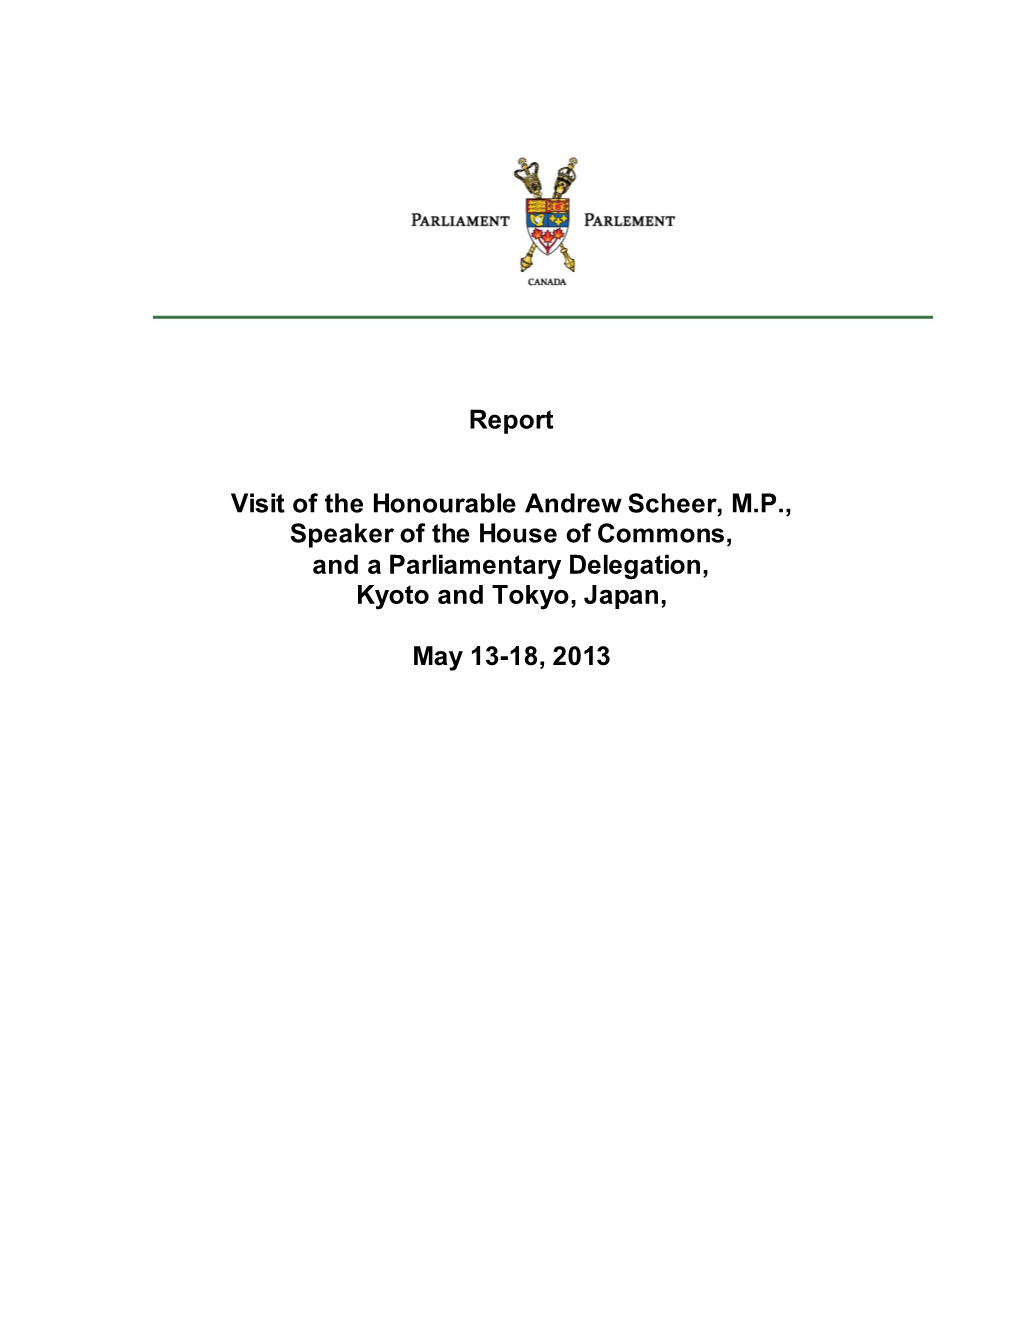 Report Visit of the Honourable Andrew Scheer, M.P., Speaker of The